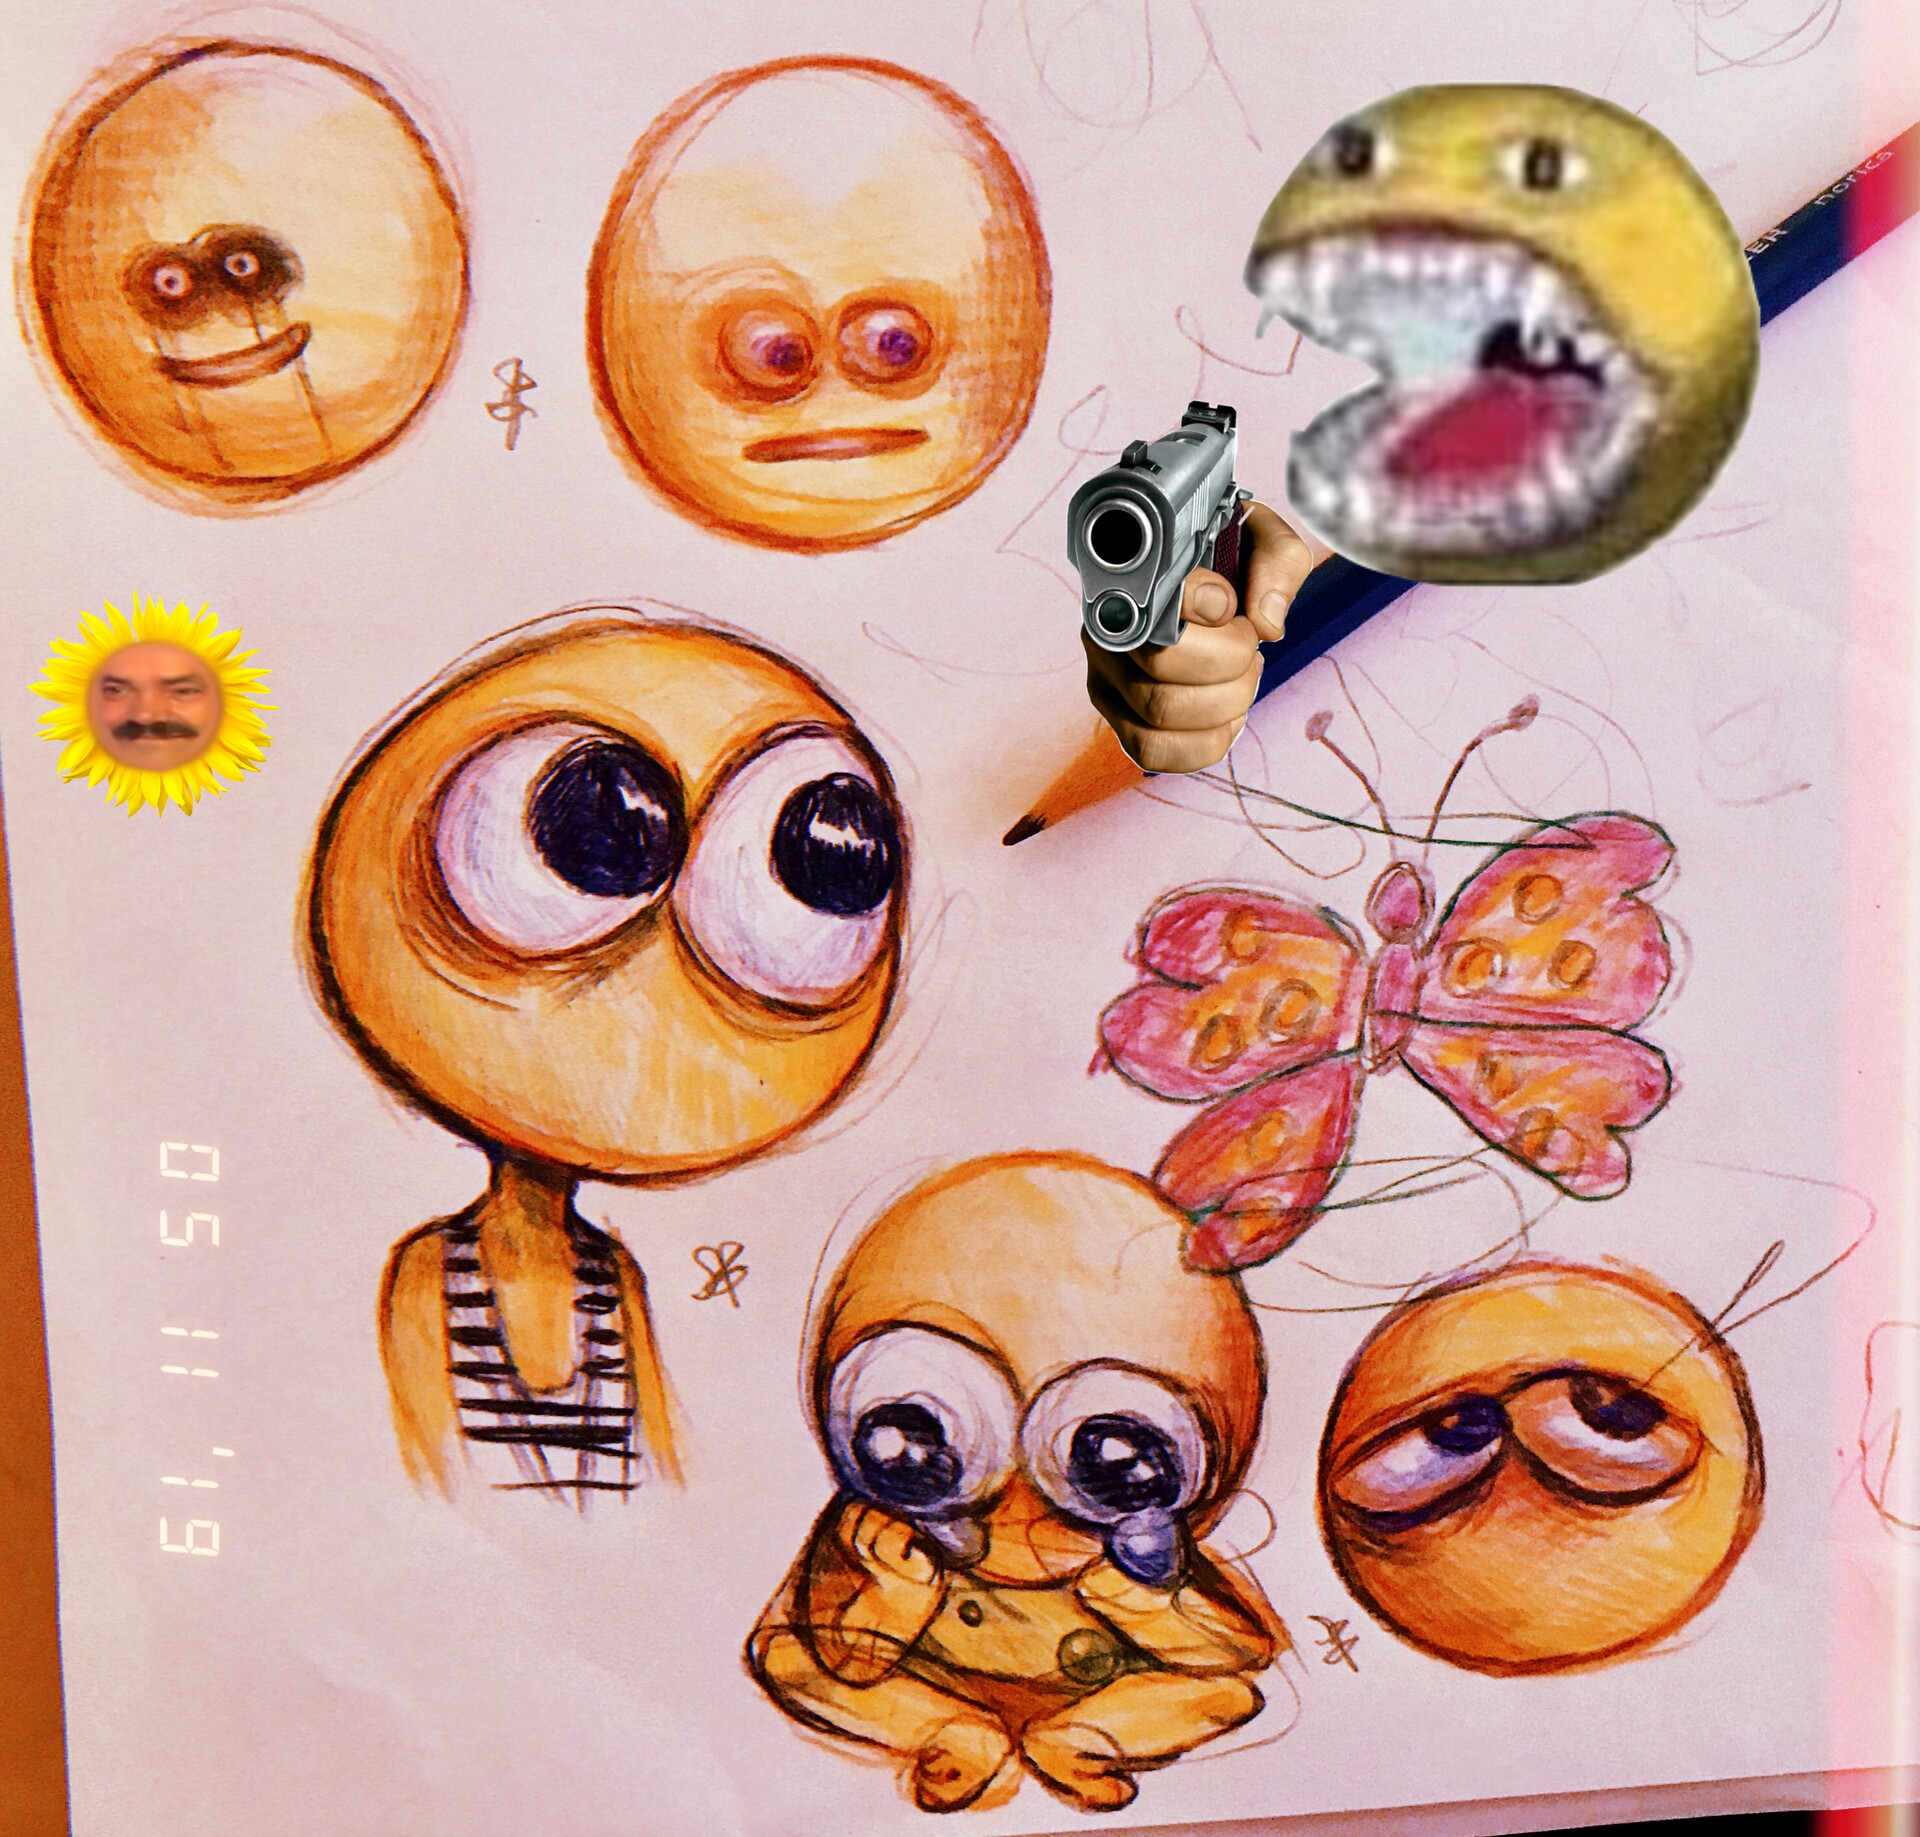 Sarah - Cursed emojis